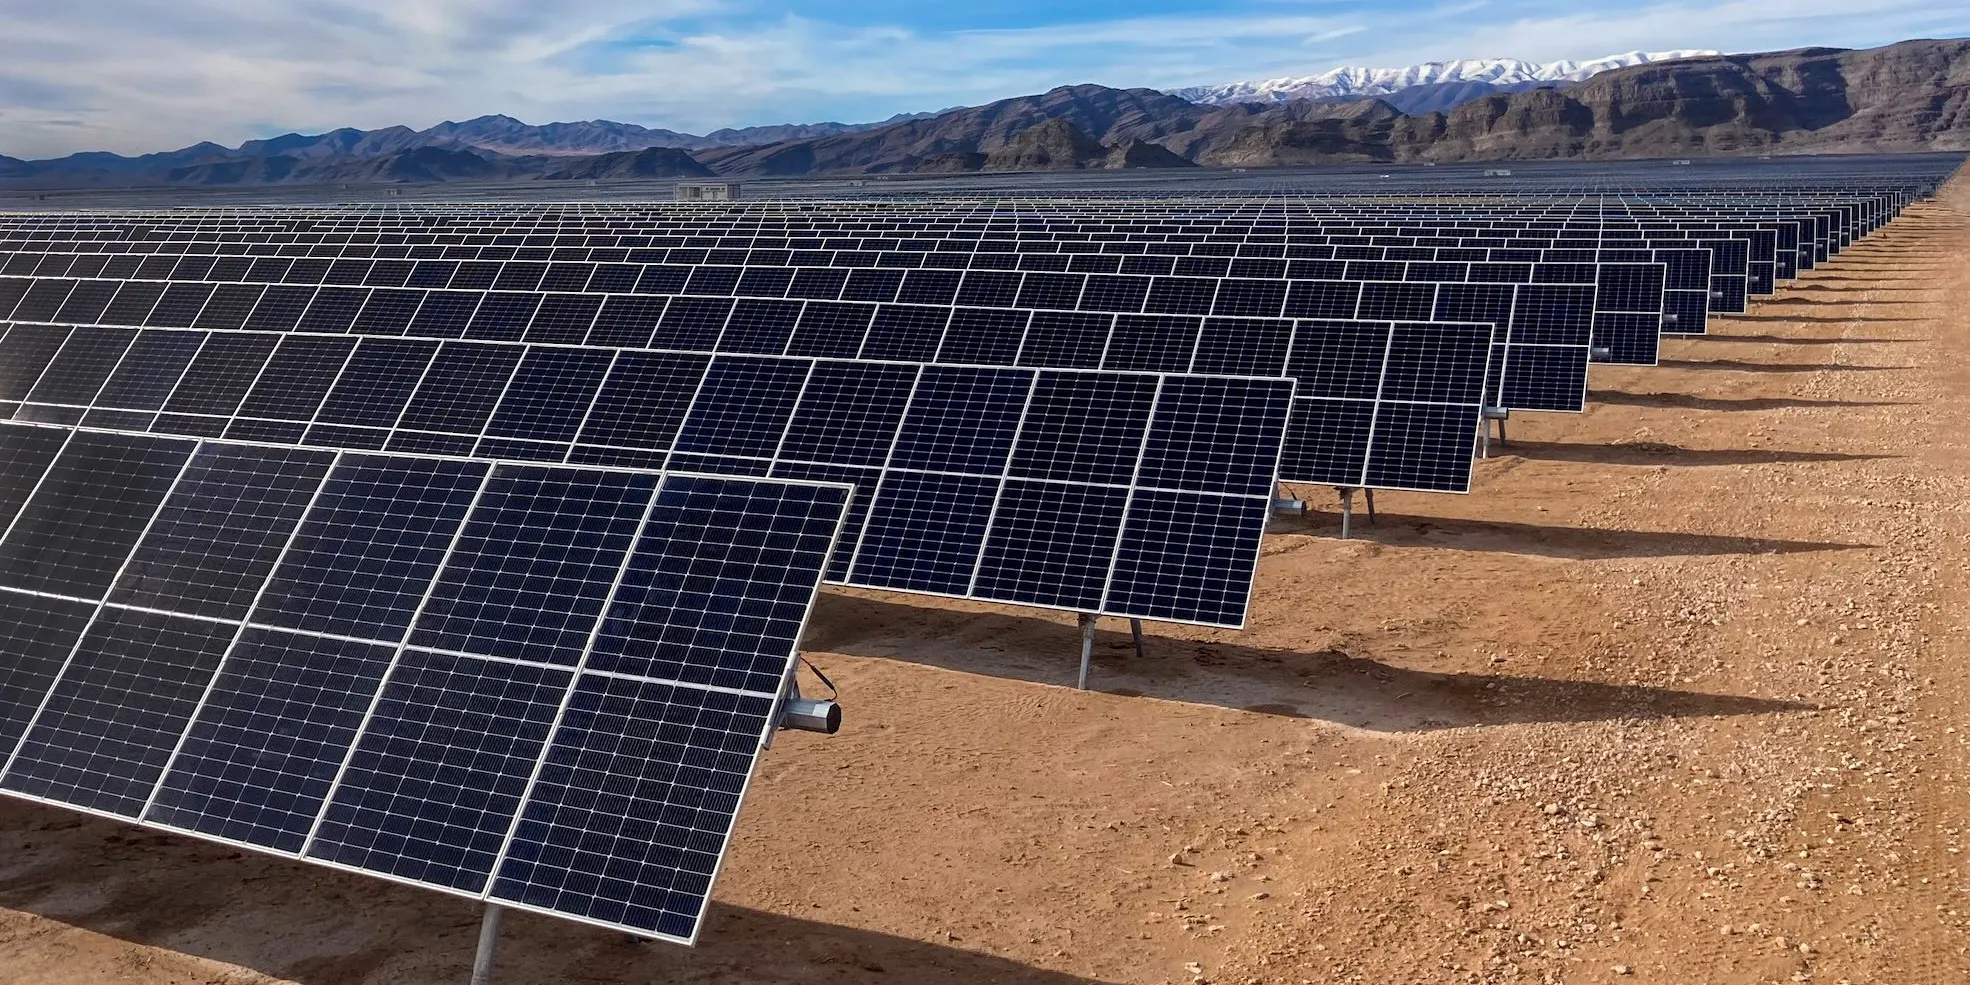 Bifacial solar panels: A cutting-edge technology